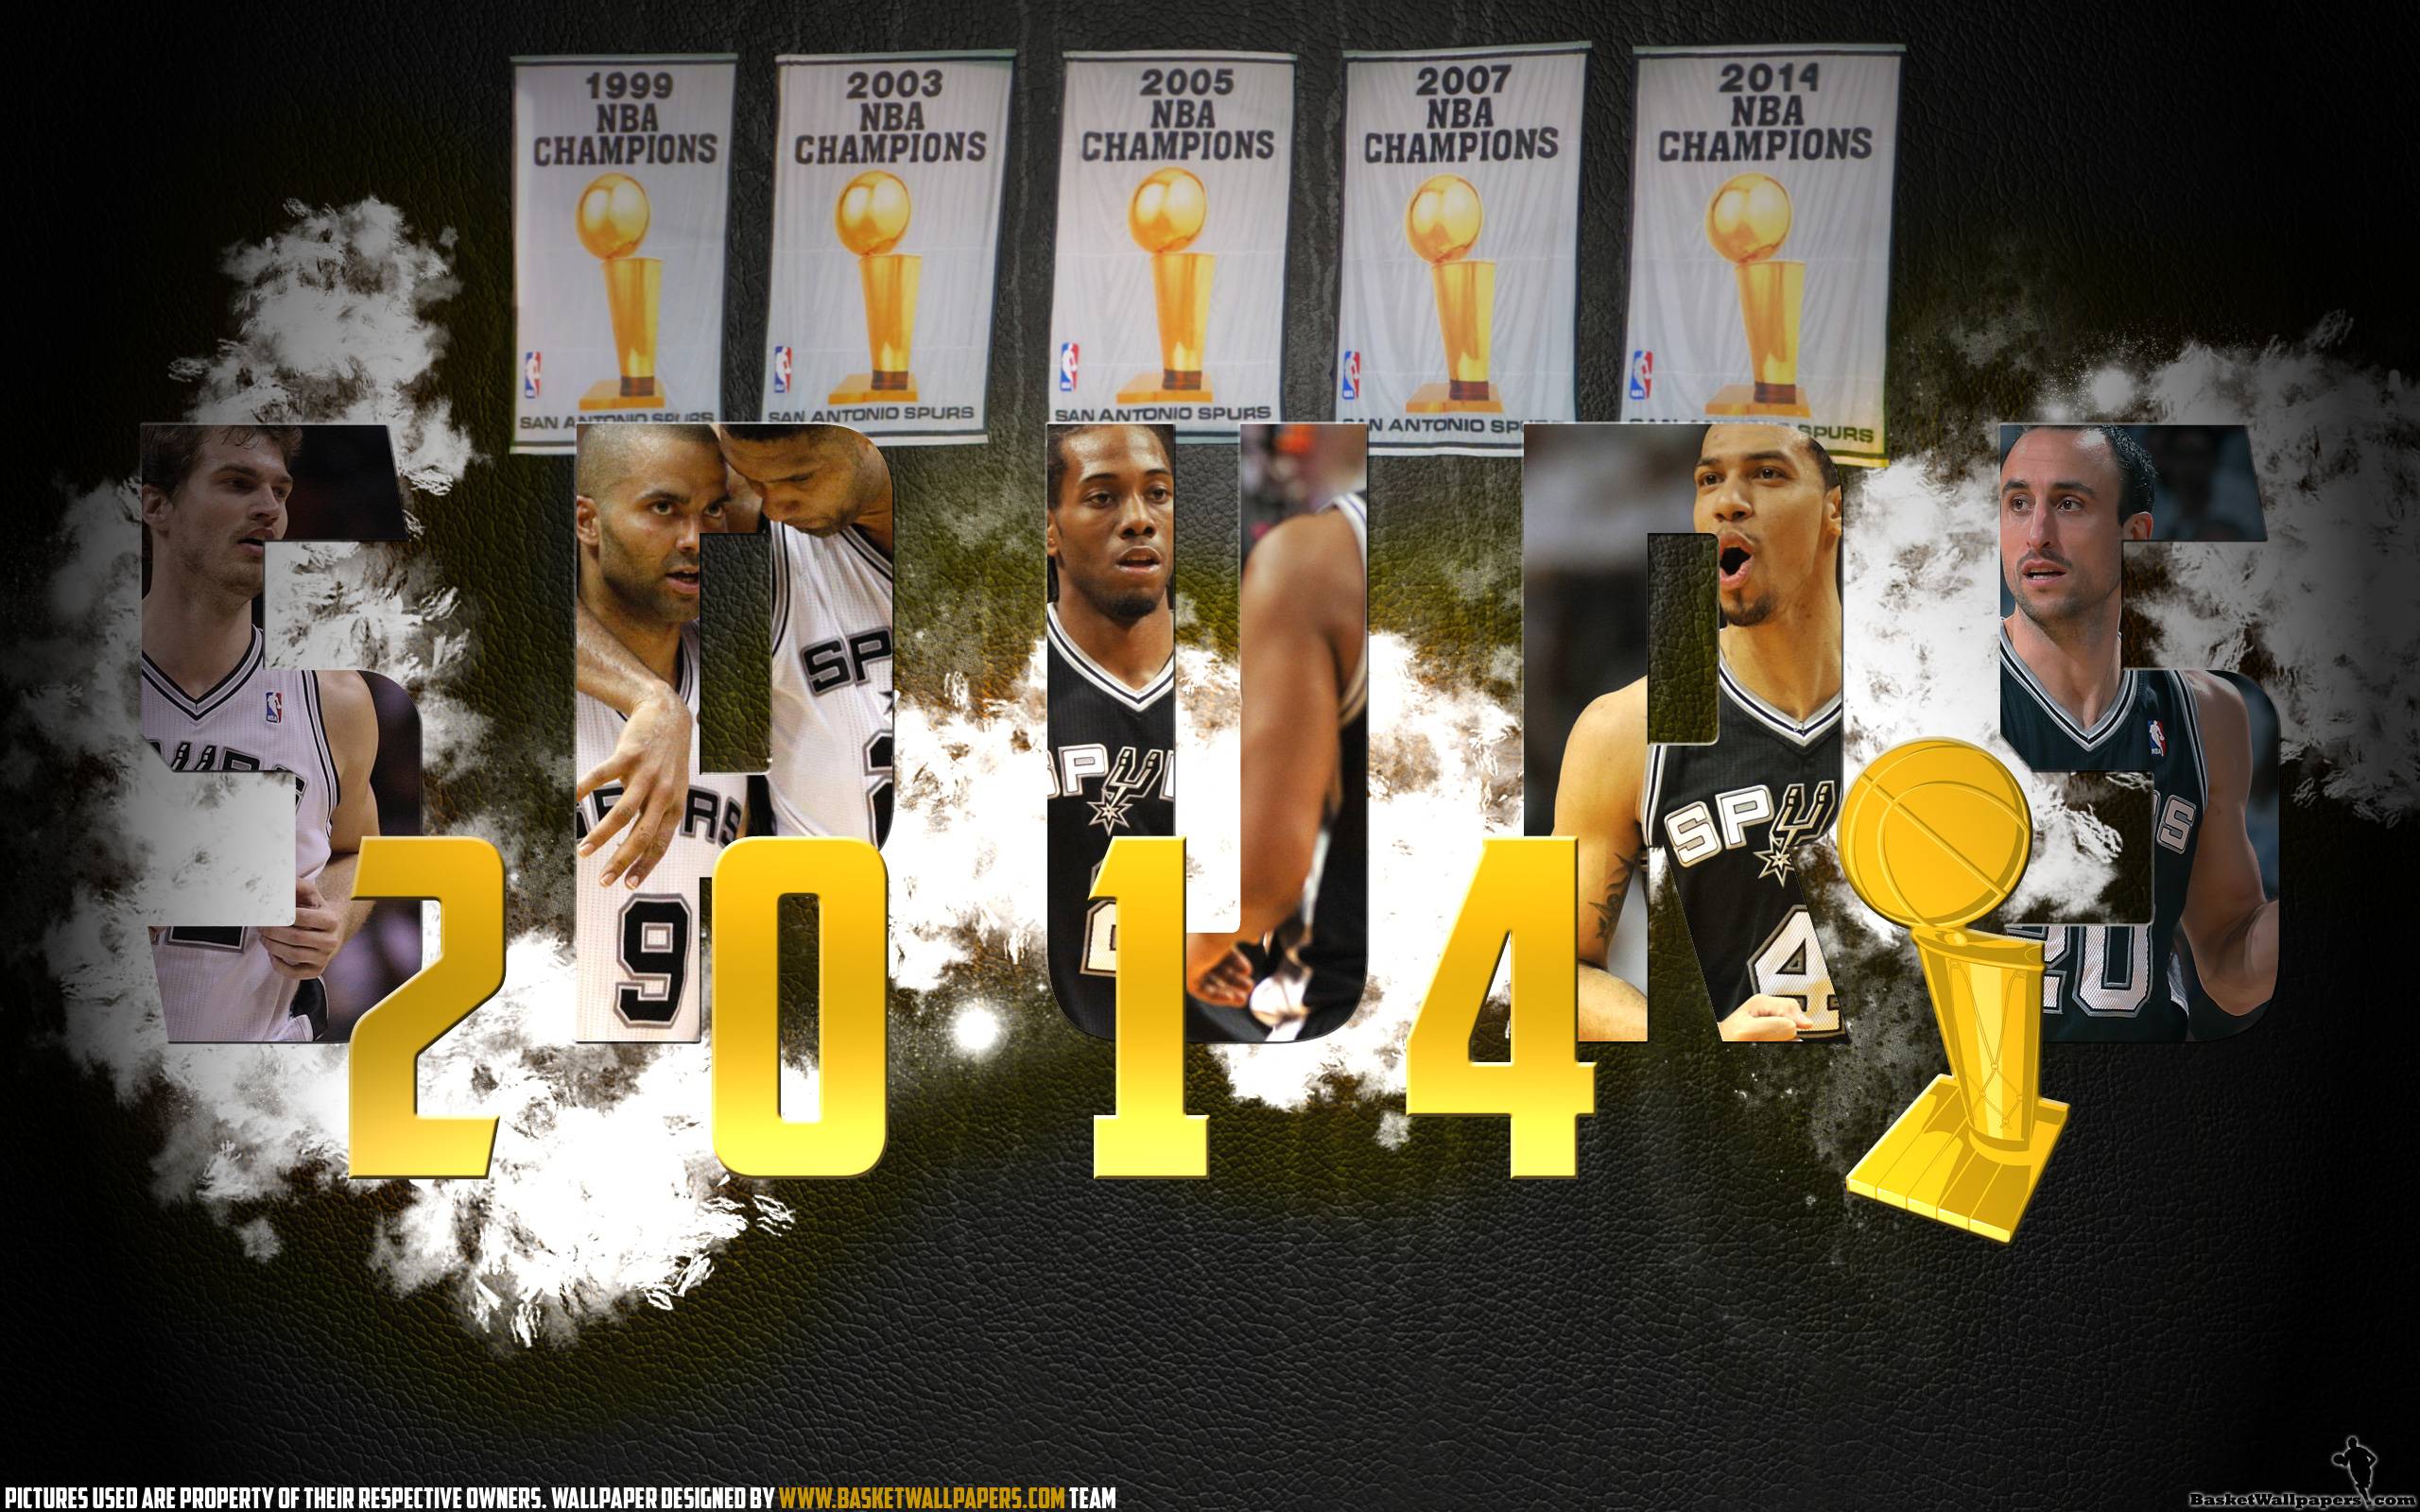 San Antonio Spurs 2014 NBA Champions Wallpaper. Basketball